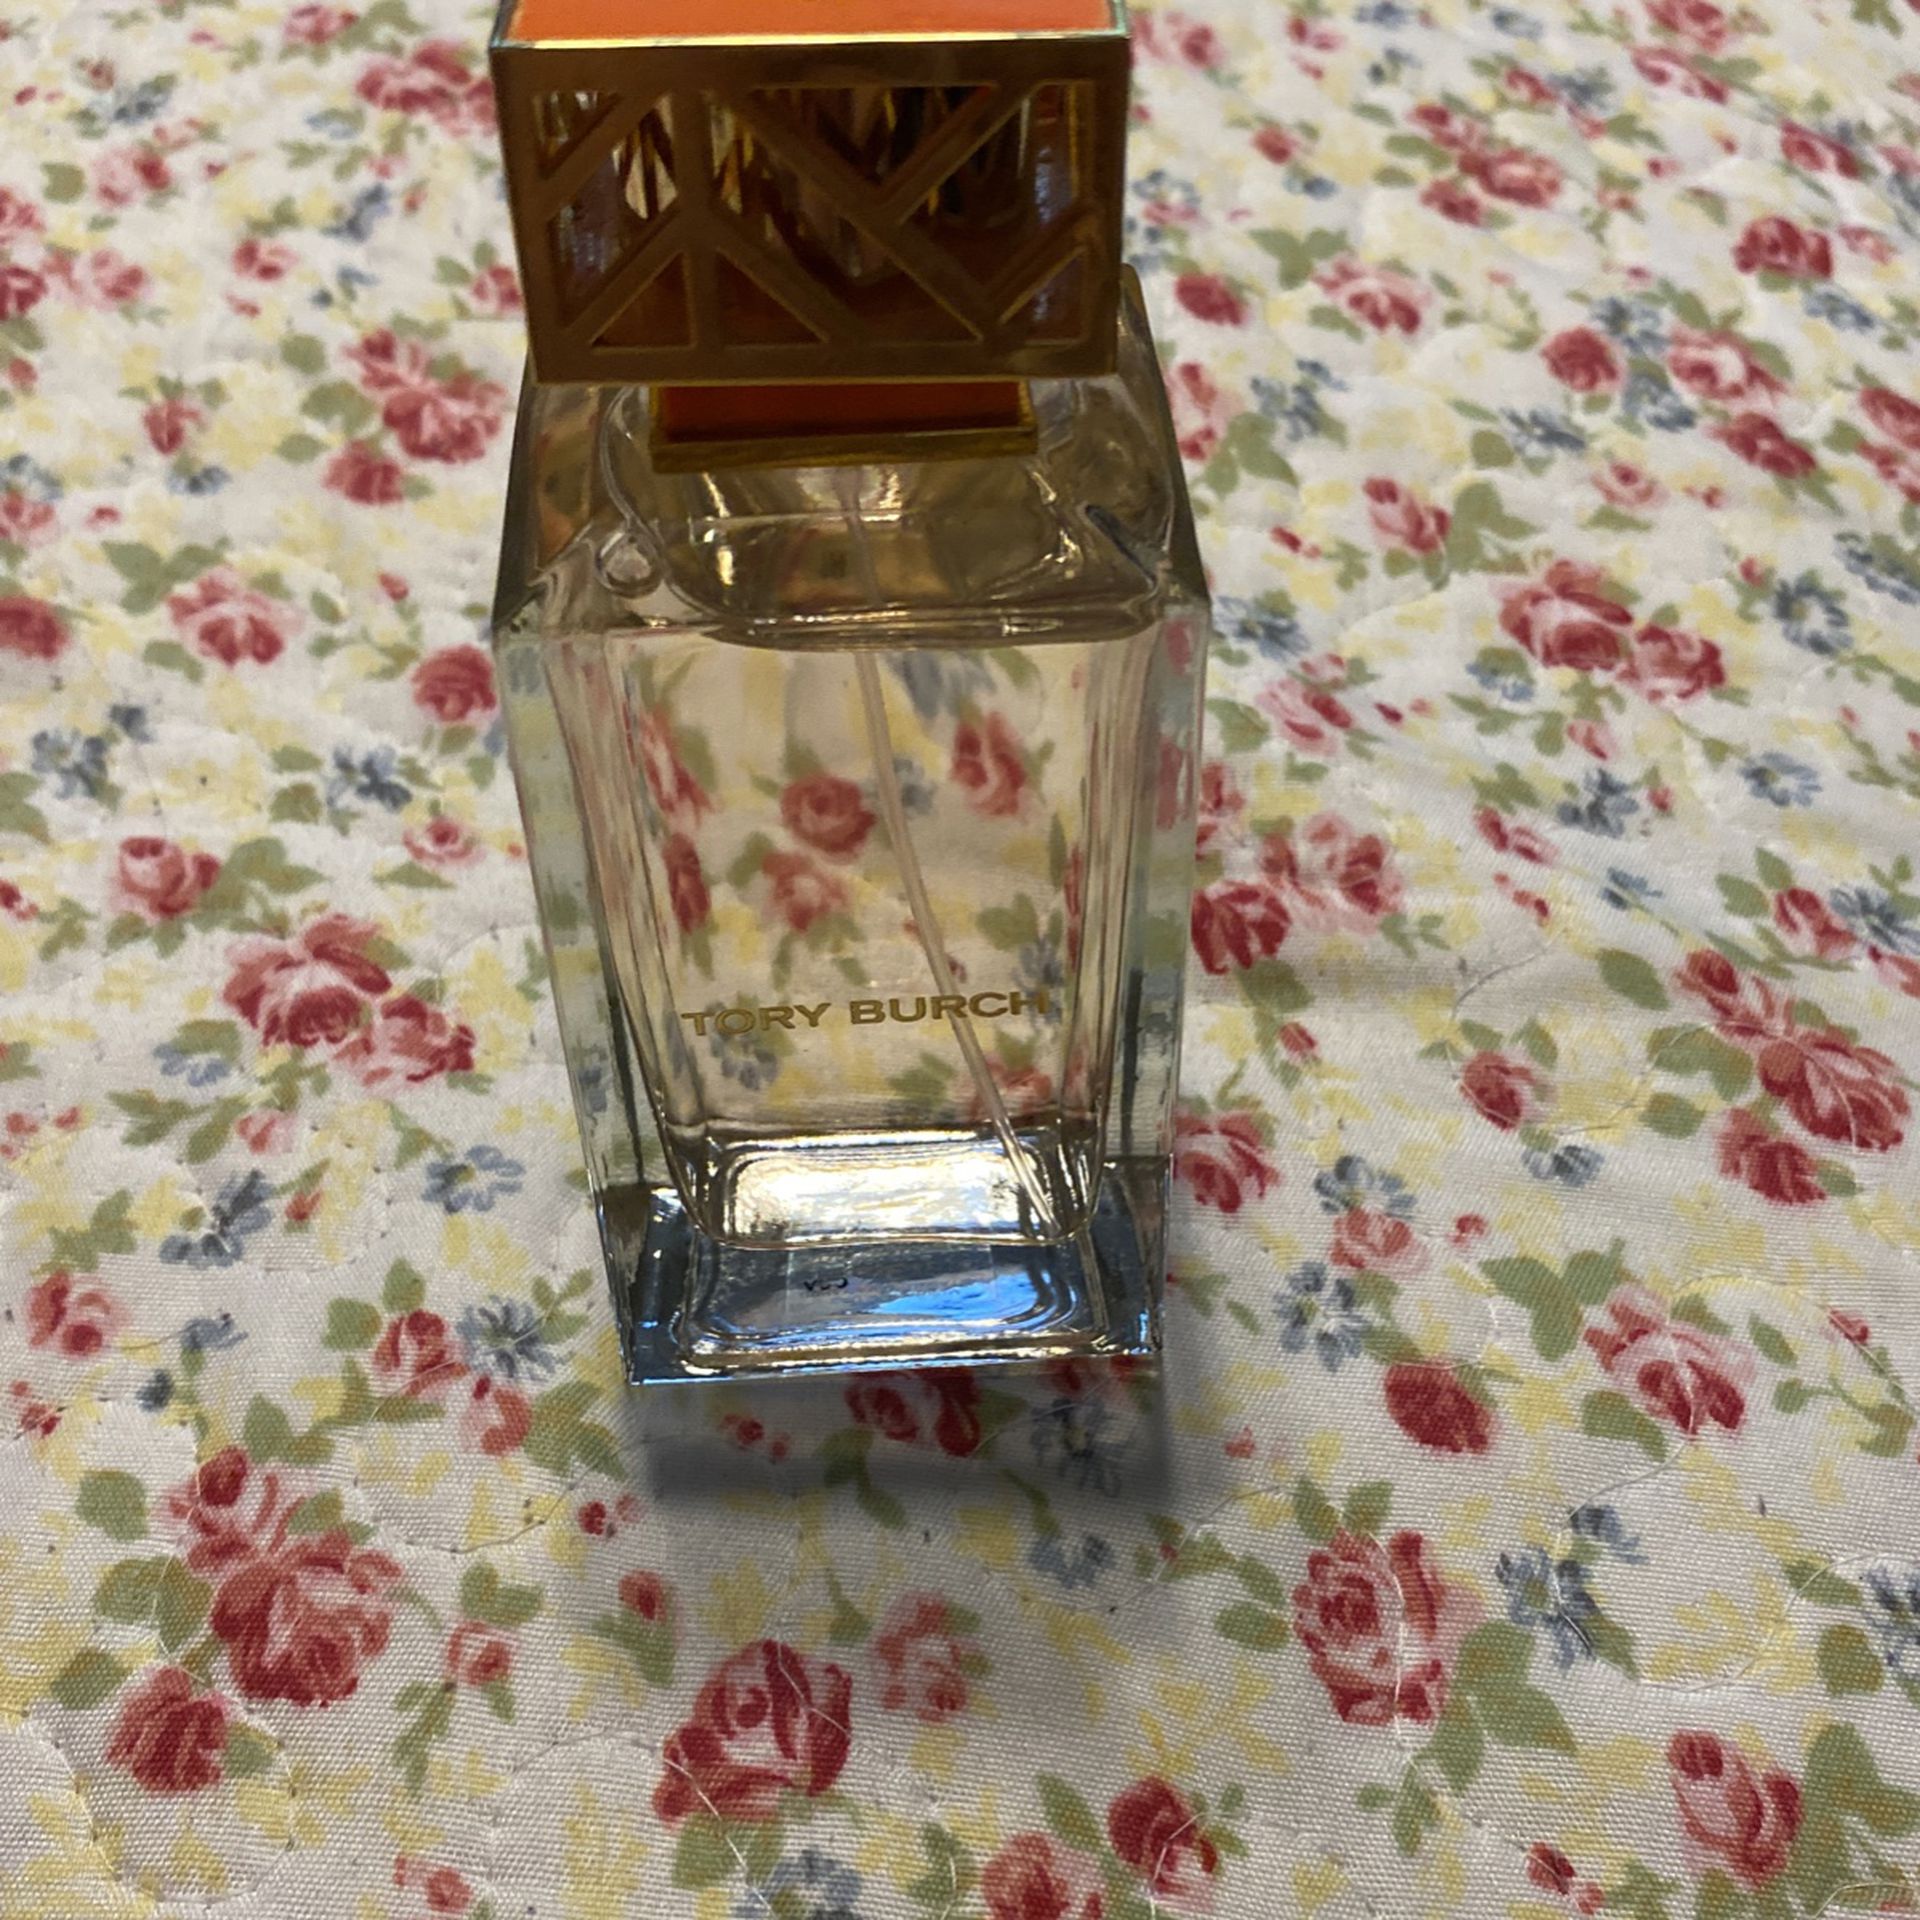 Tory Burch Perfume